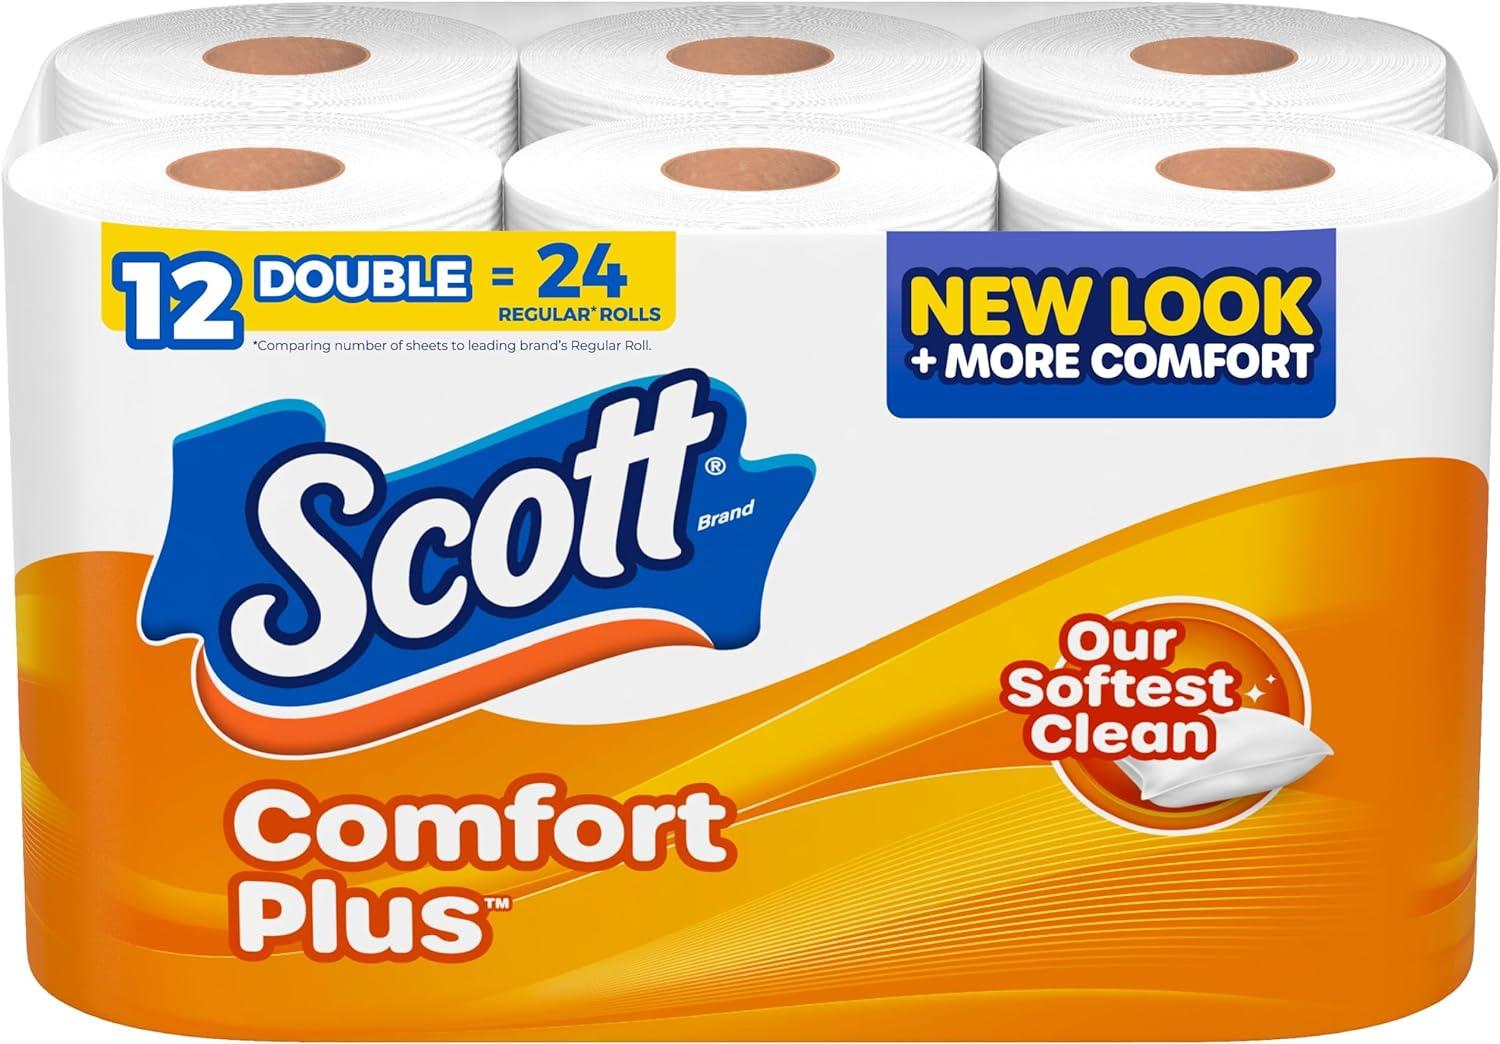 Scott ComfortPlus Toilet Paper 12 Rolls for $4.79